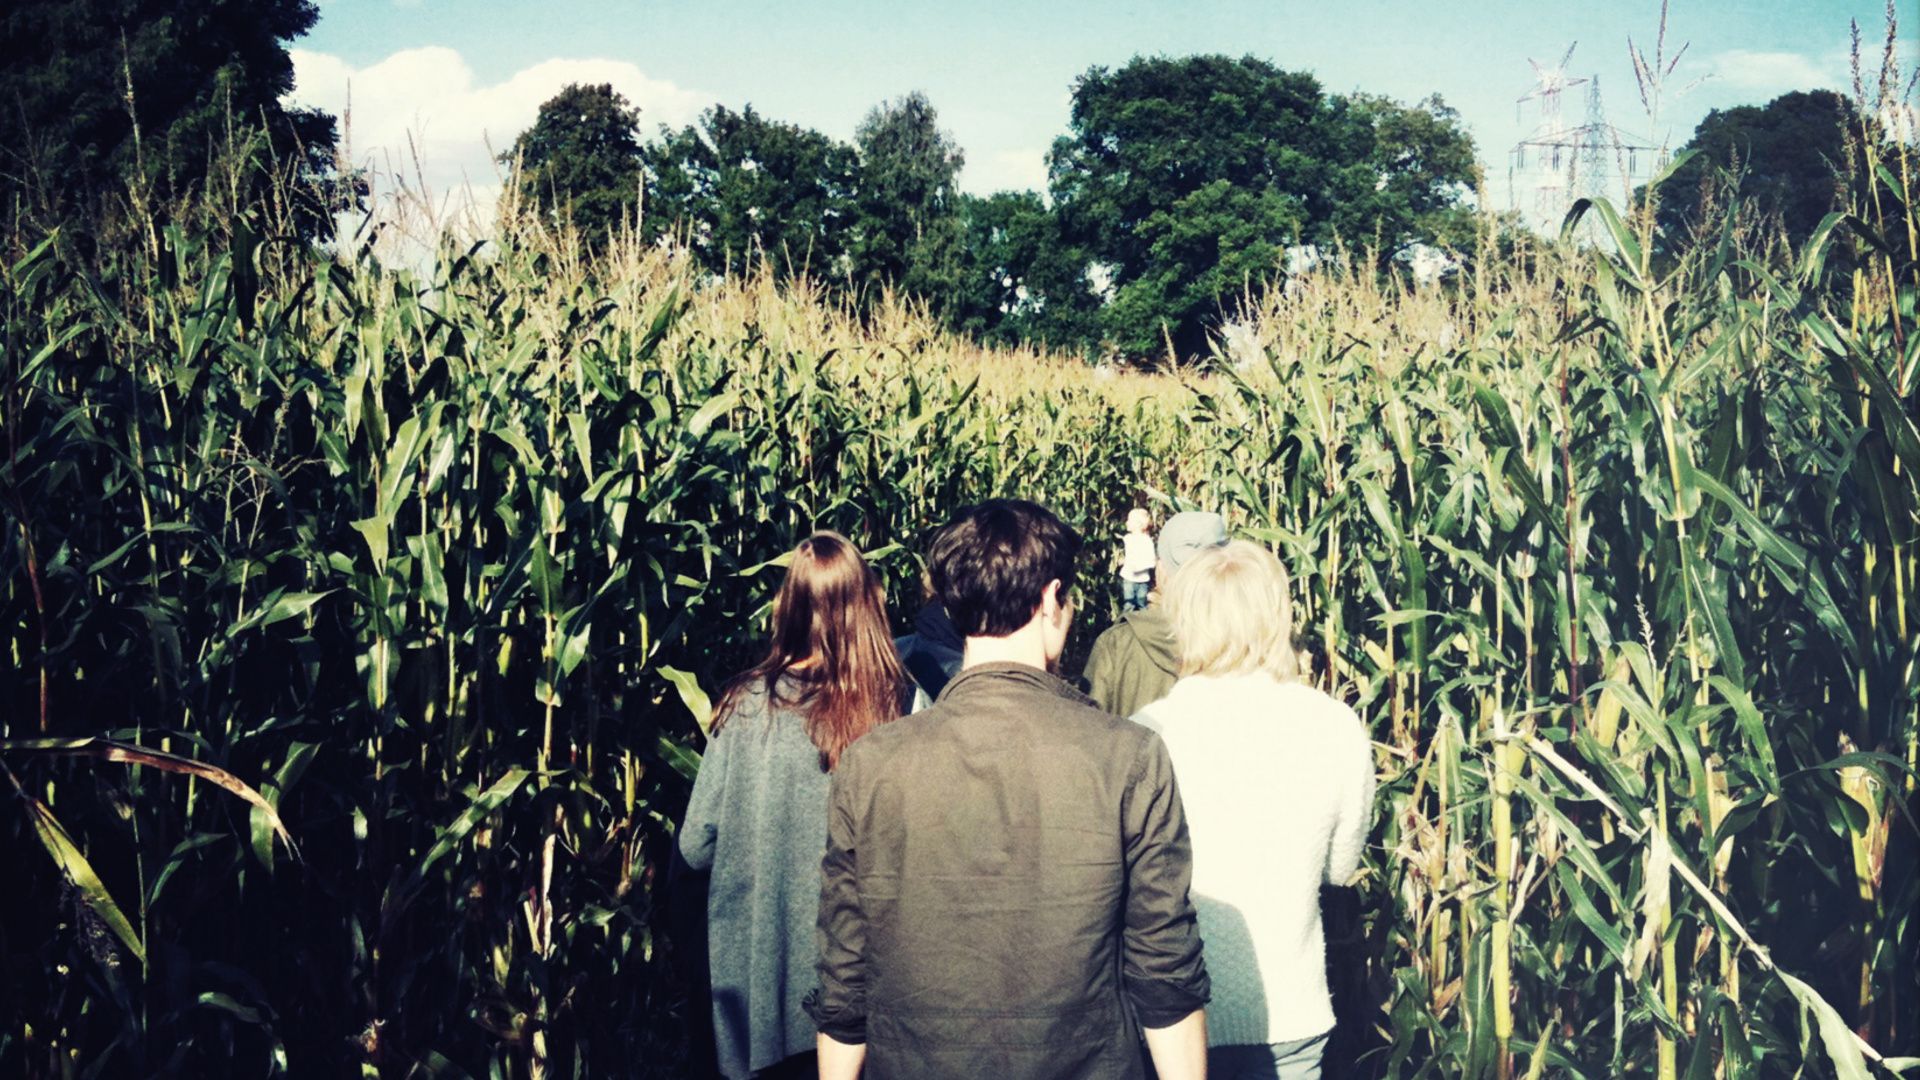 Several people walk through a cornfield